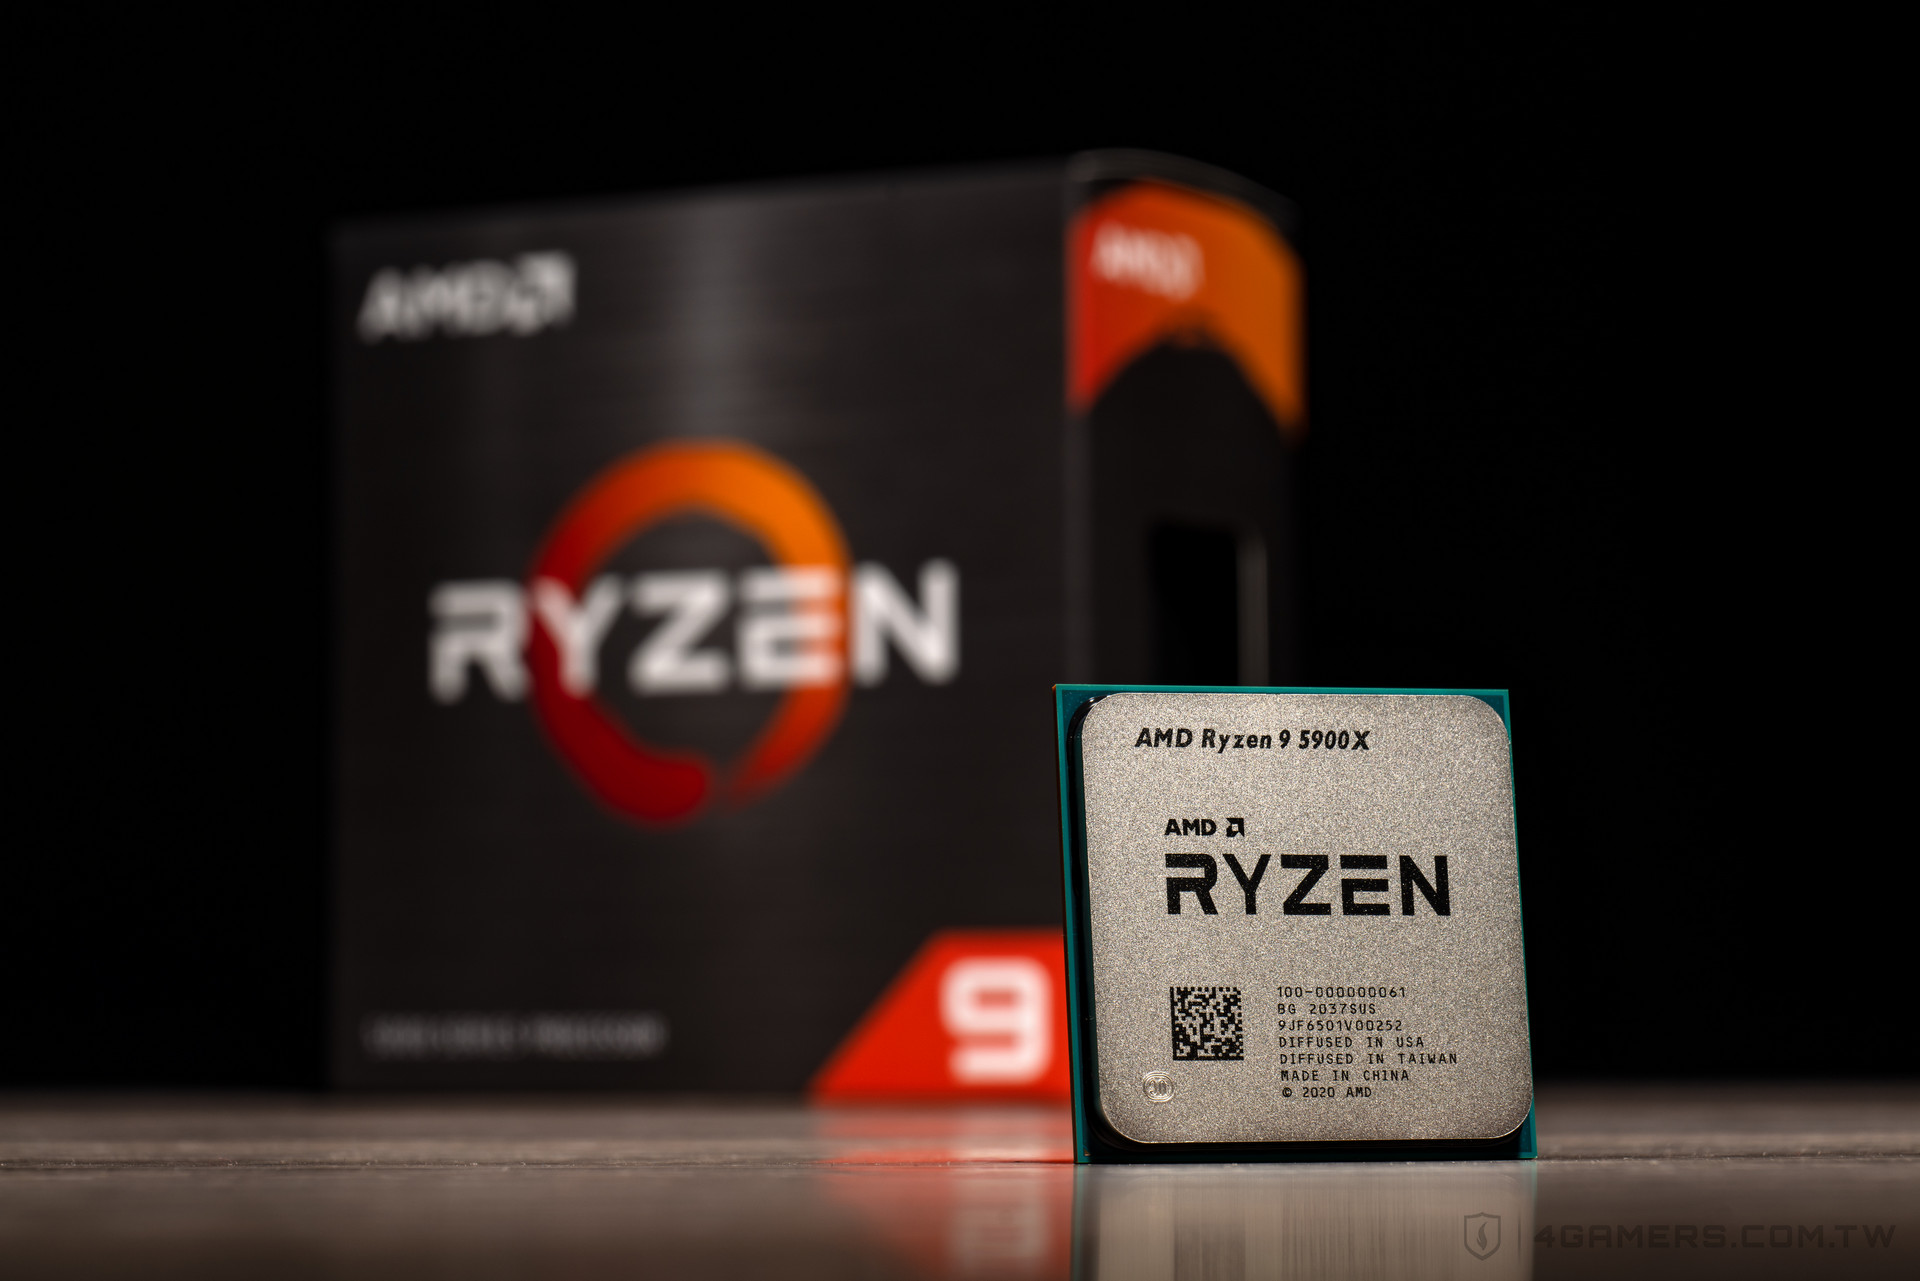 Райзен 9 купить. Процессор АМД 9 5900. Процессор AMD Ryzen 9. Процессор AMD Ryzen 9 Vermeer. Процессор AMD Ryzen 7 5800x.